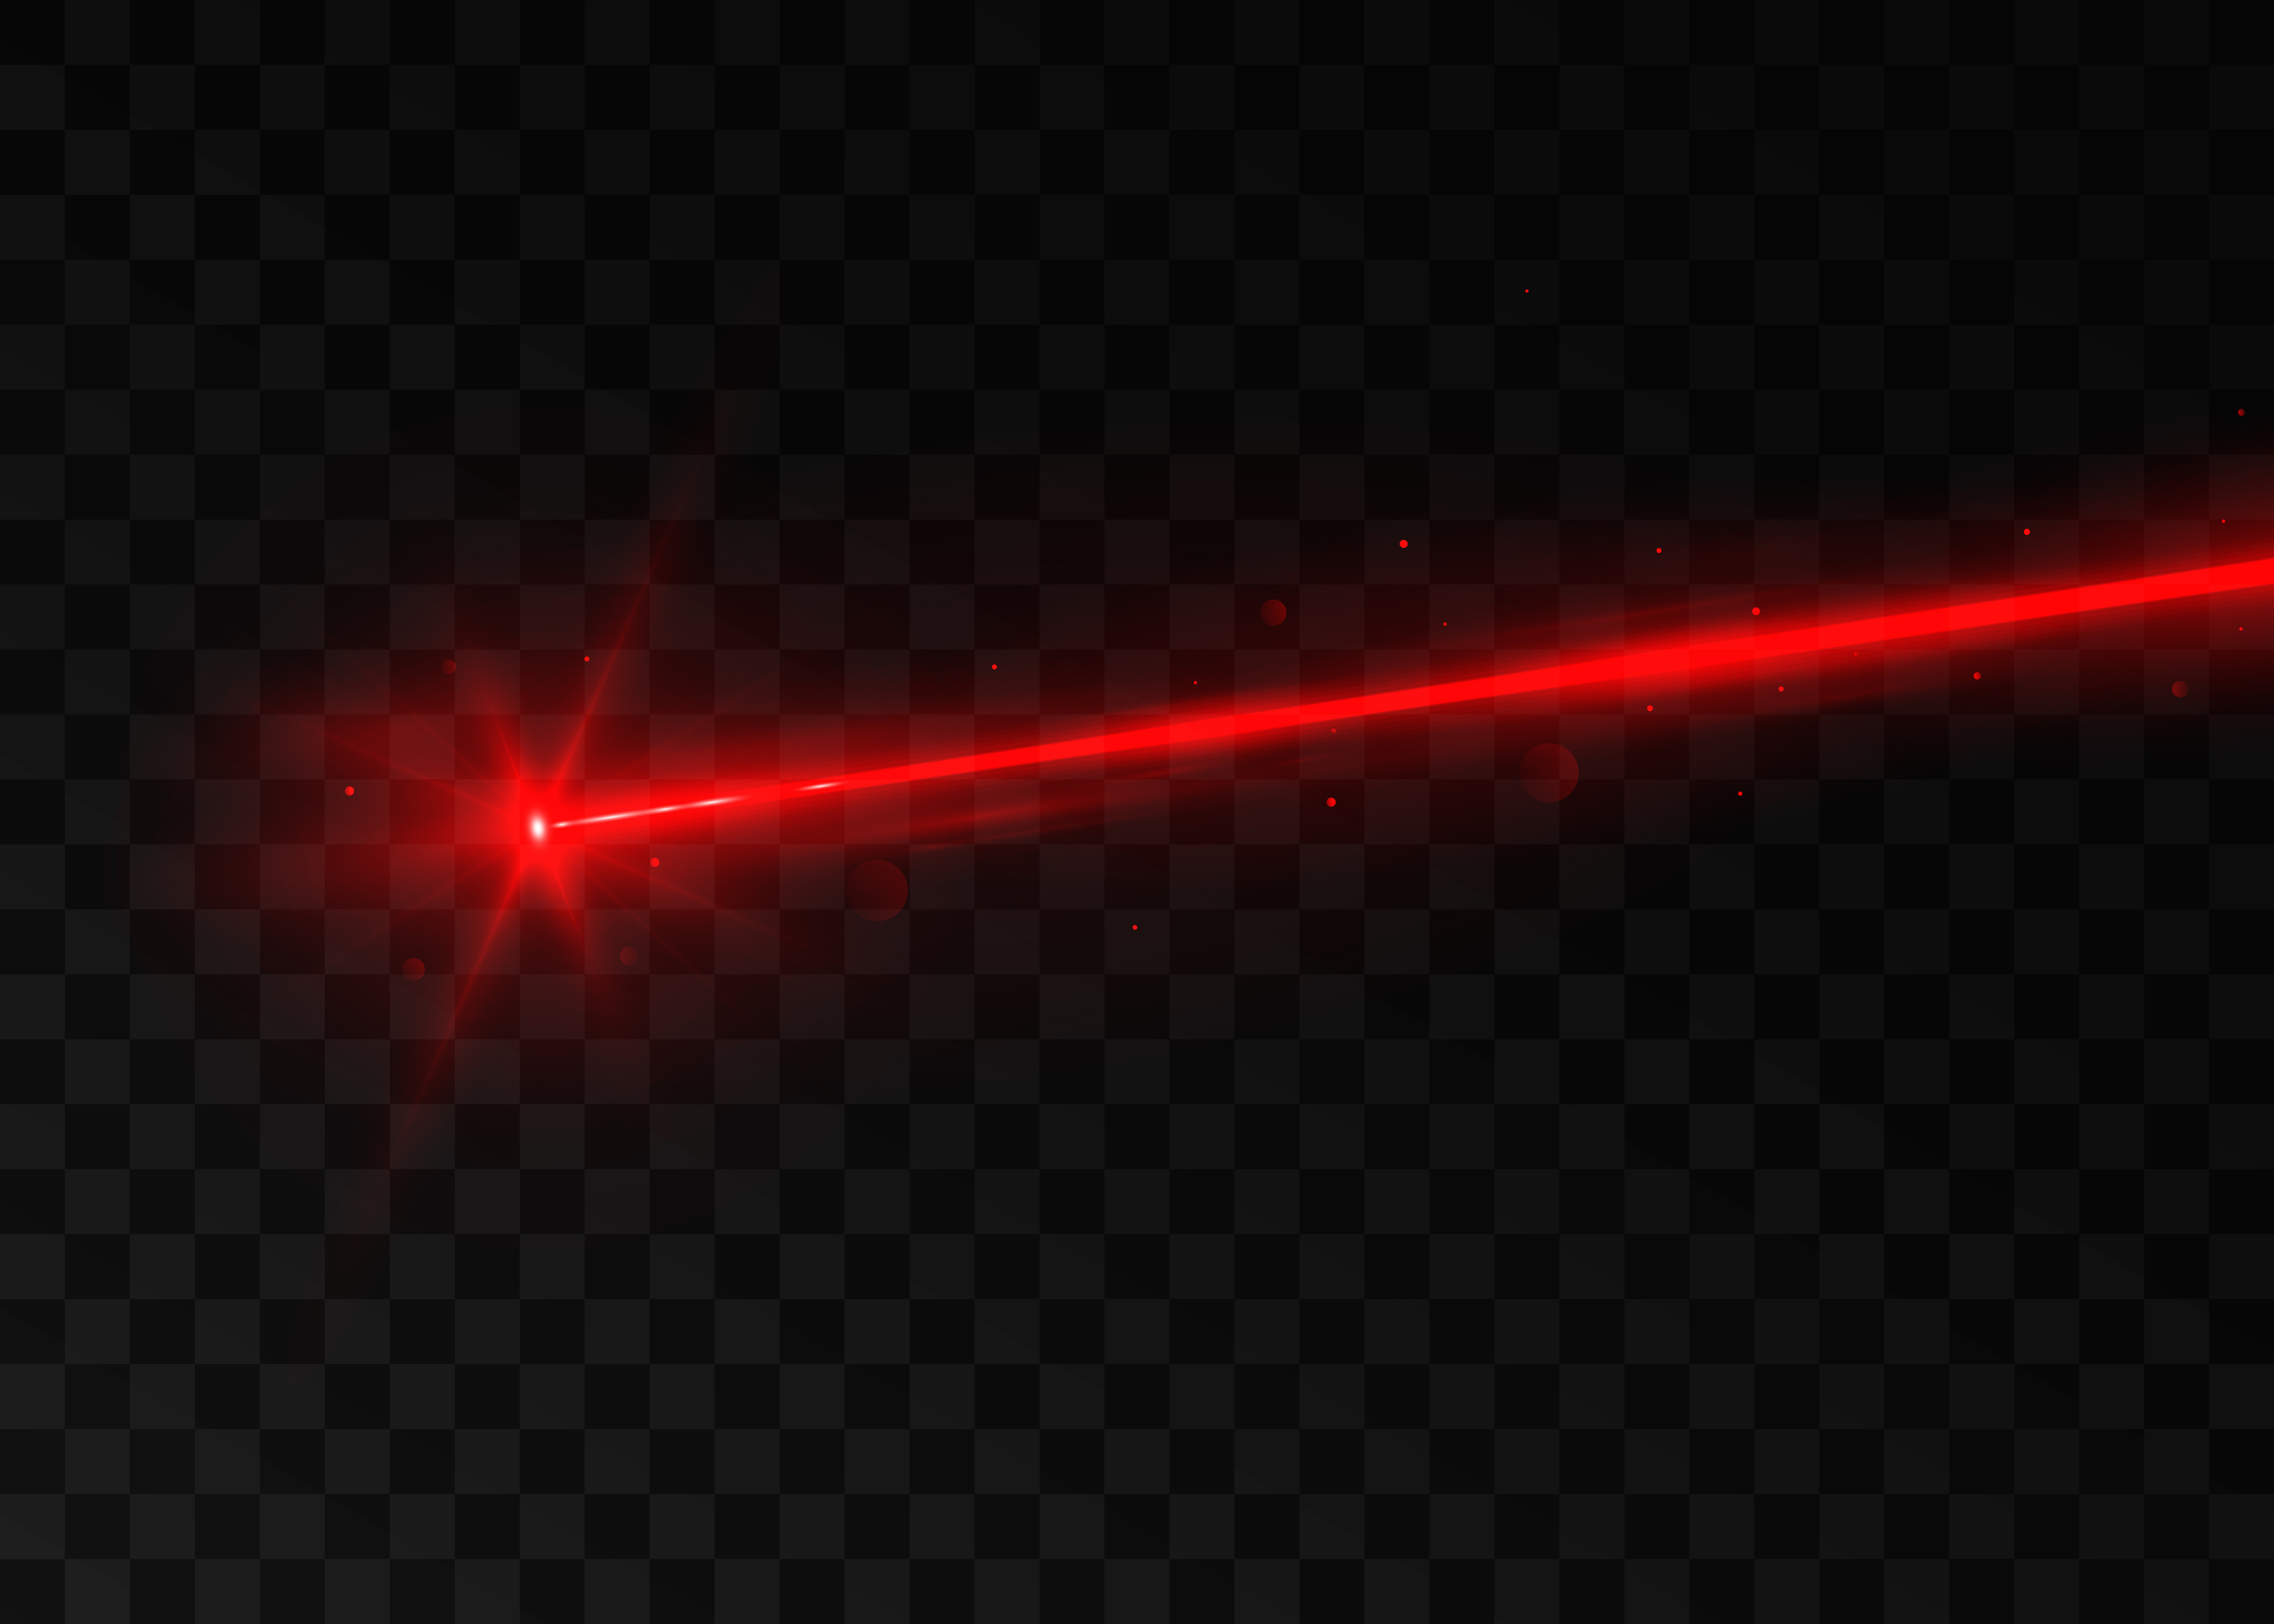 laser pulse faster than light